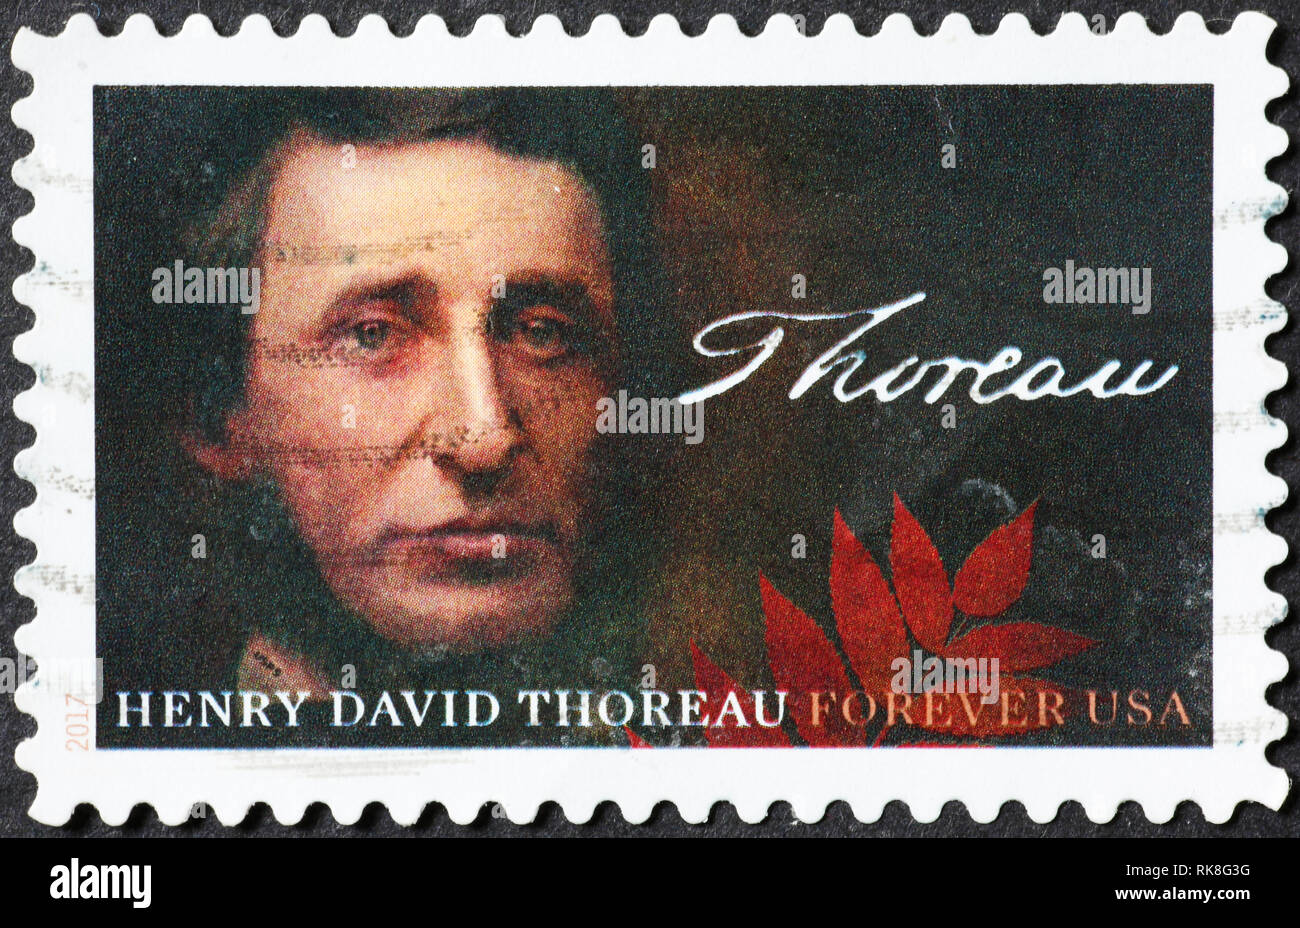 Henry David Thoreau on american postage stamp Stock Photo